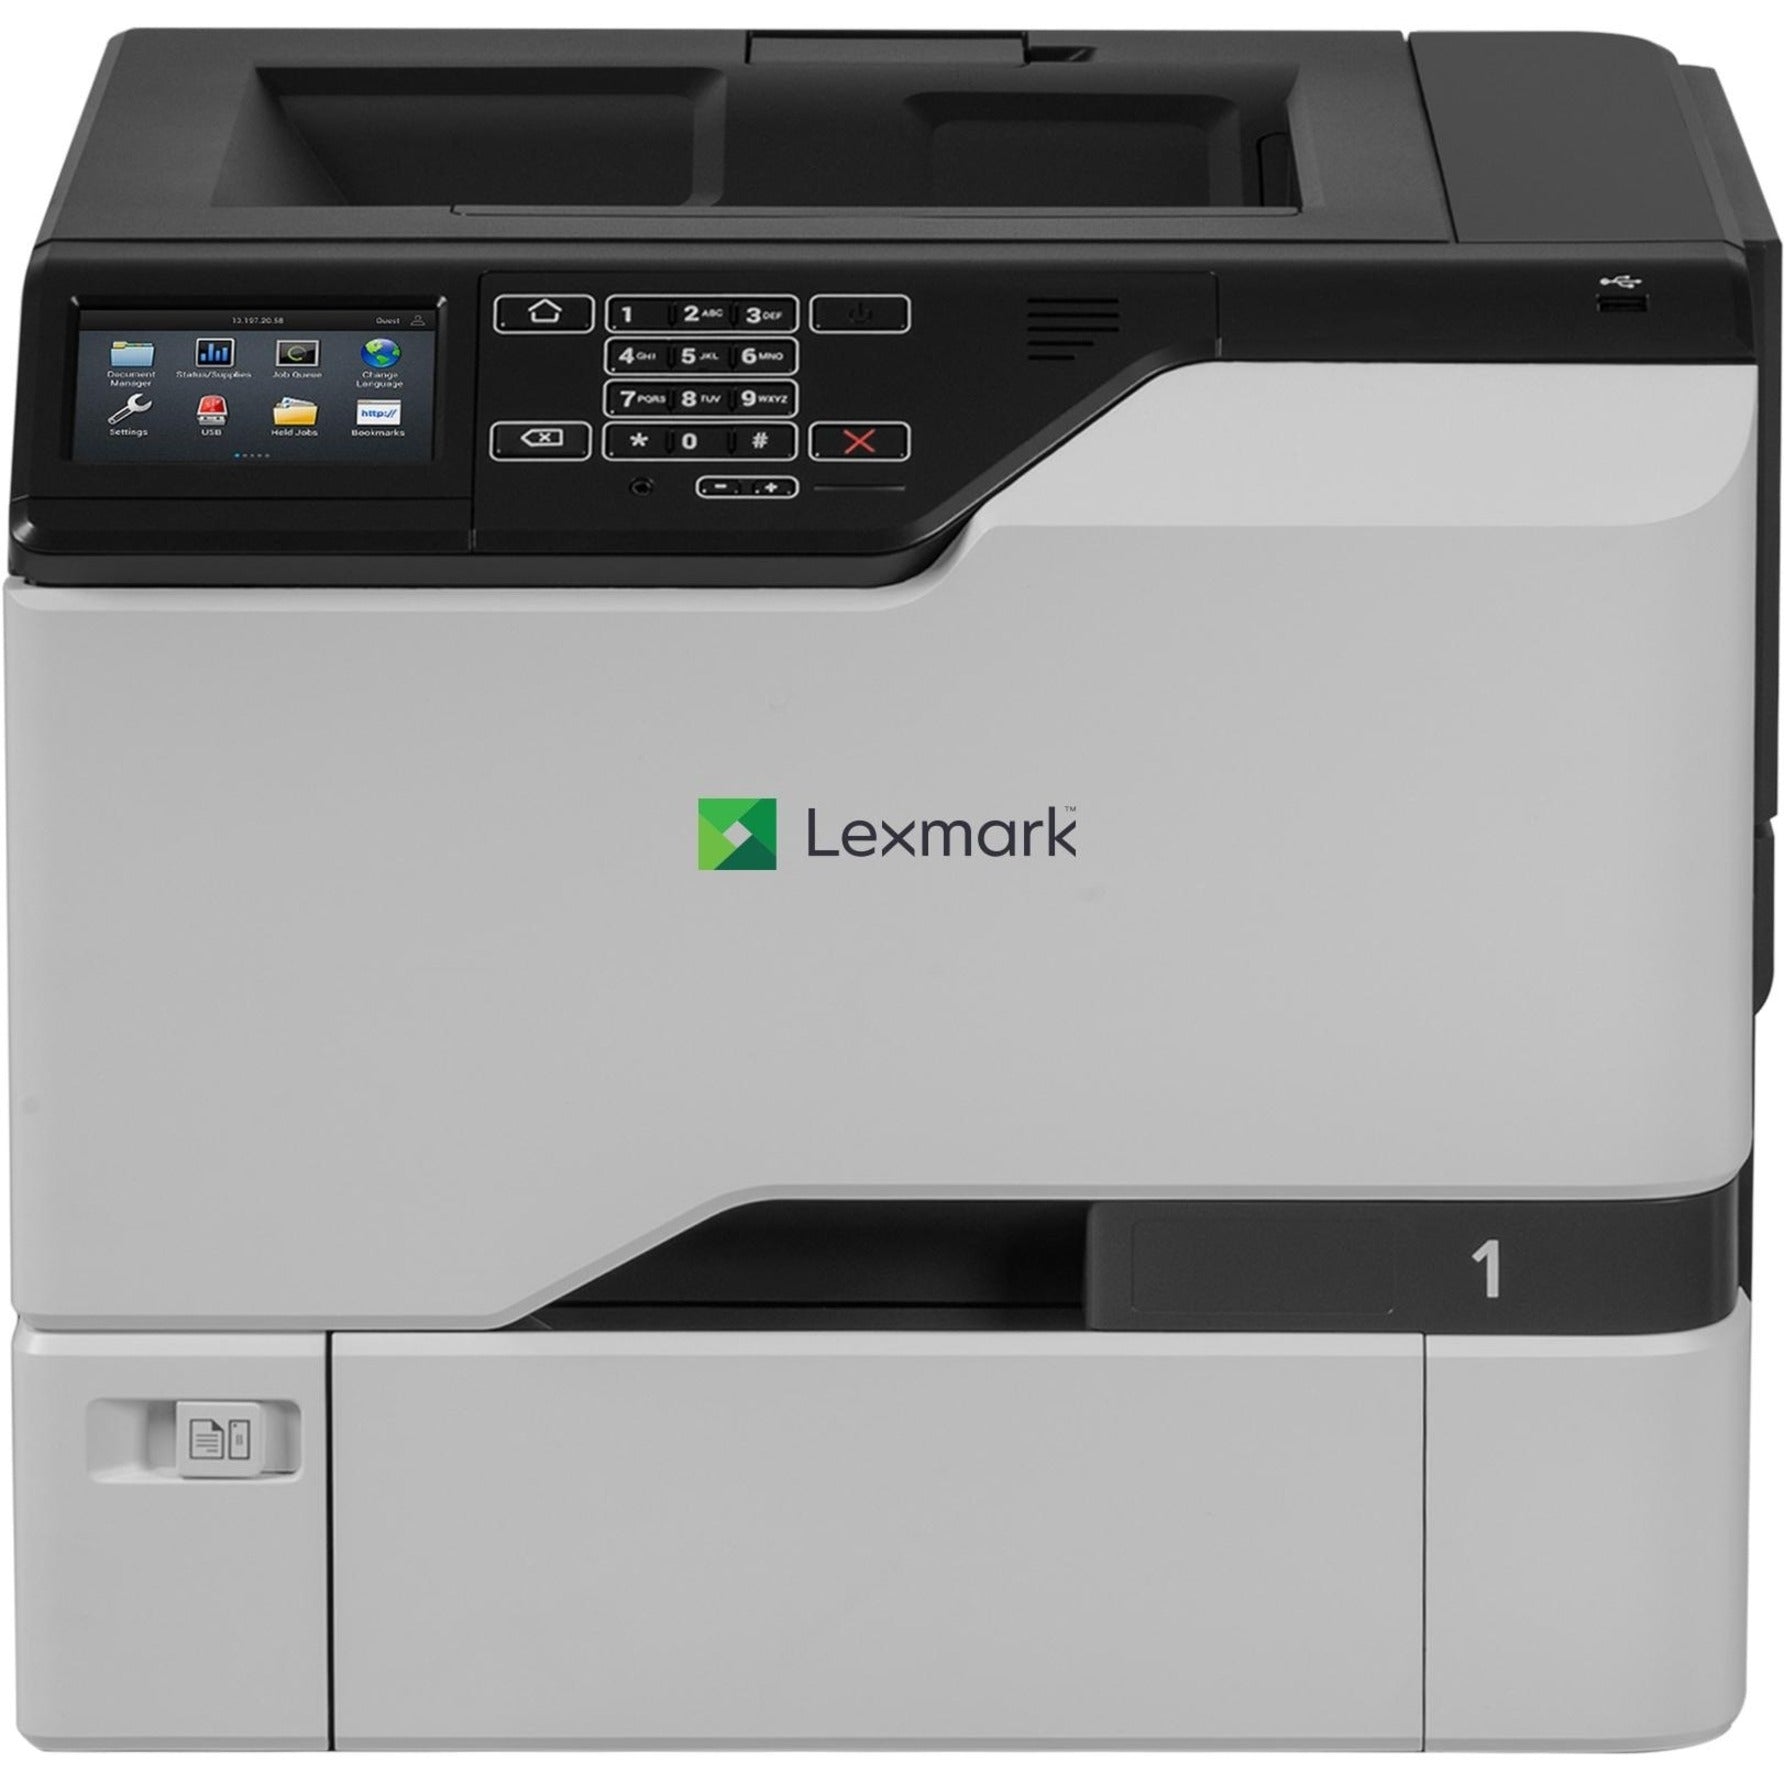 Lexmark 40C9100 CS720de Color Laser Printer, Automatic Duplex Printing, 40 ppm, 2400 x 600 dpi